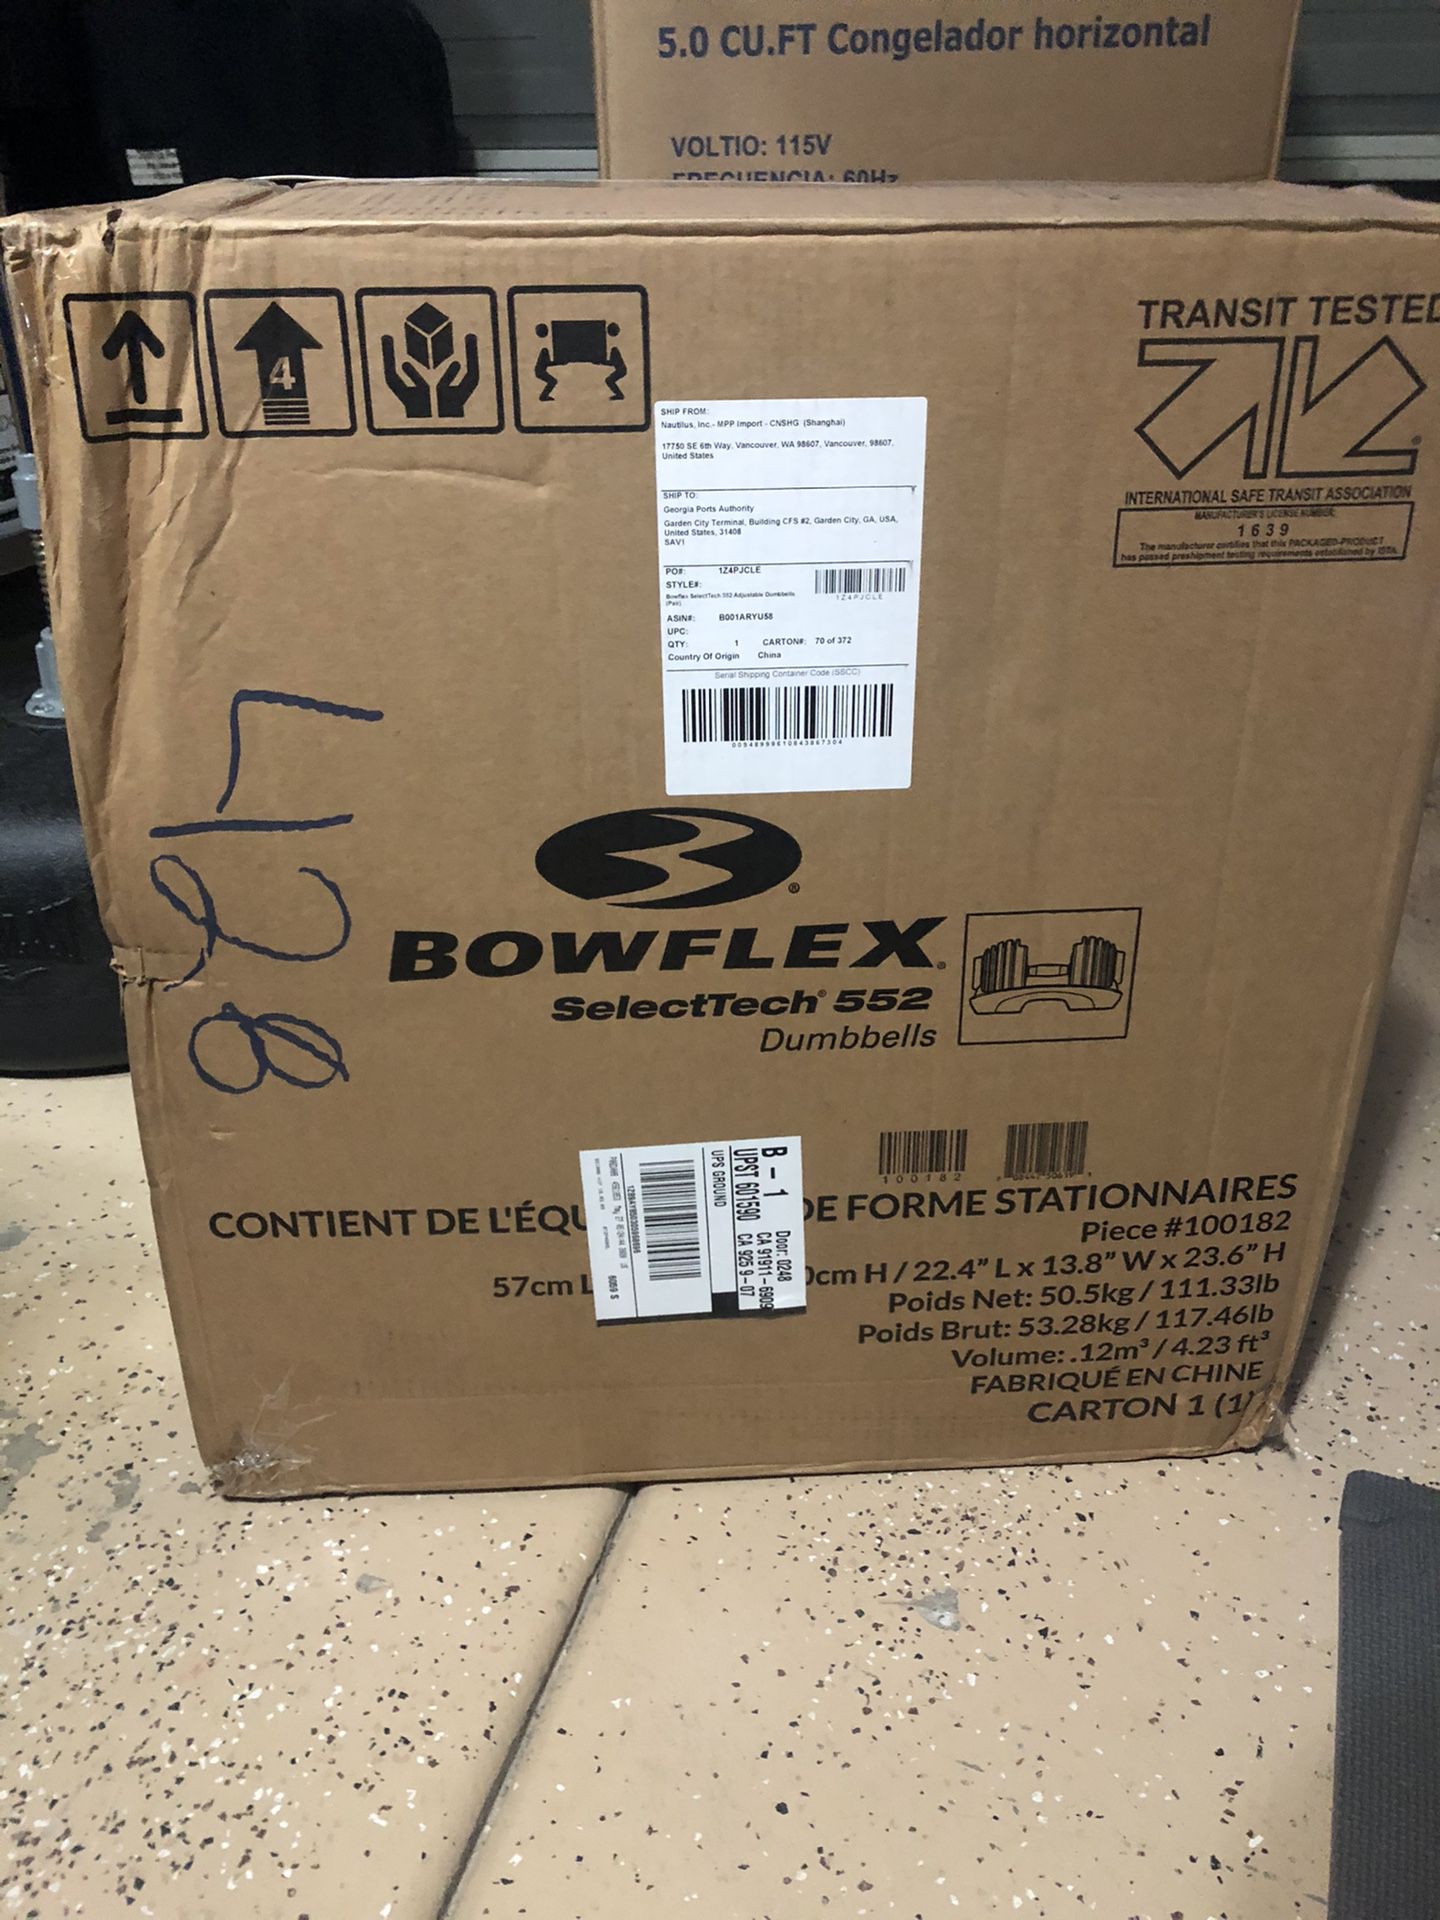 Bowflex SelectTech 552 Dumbbells